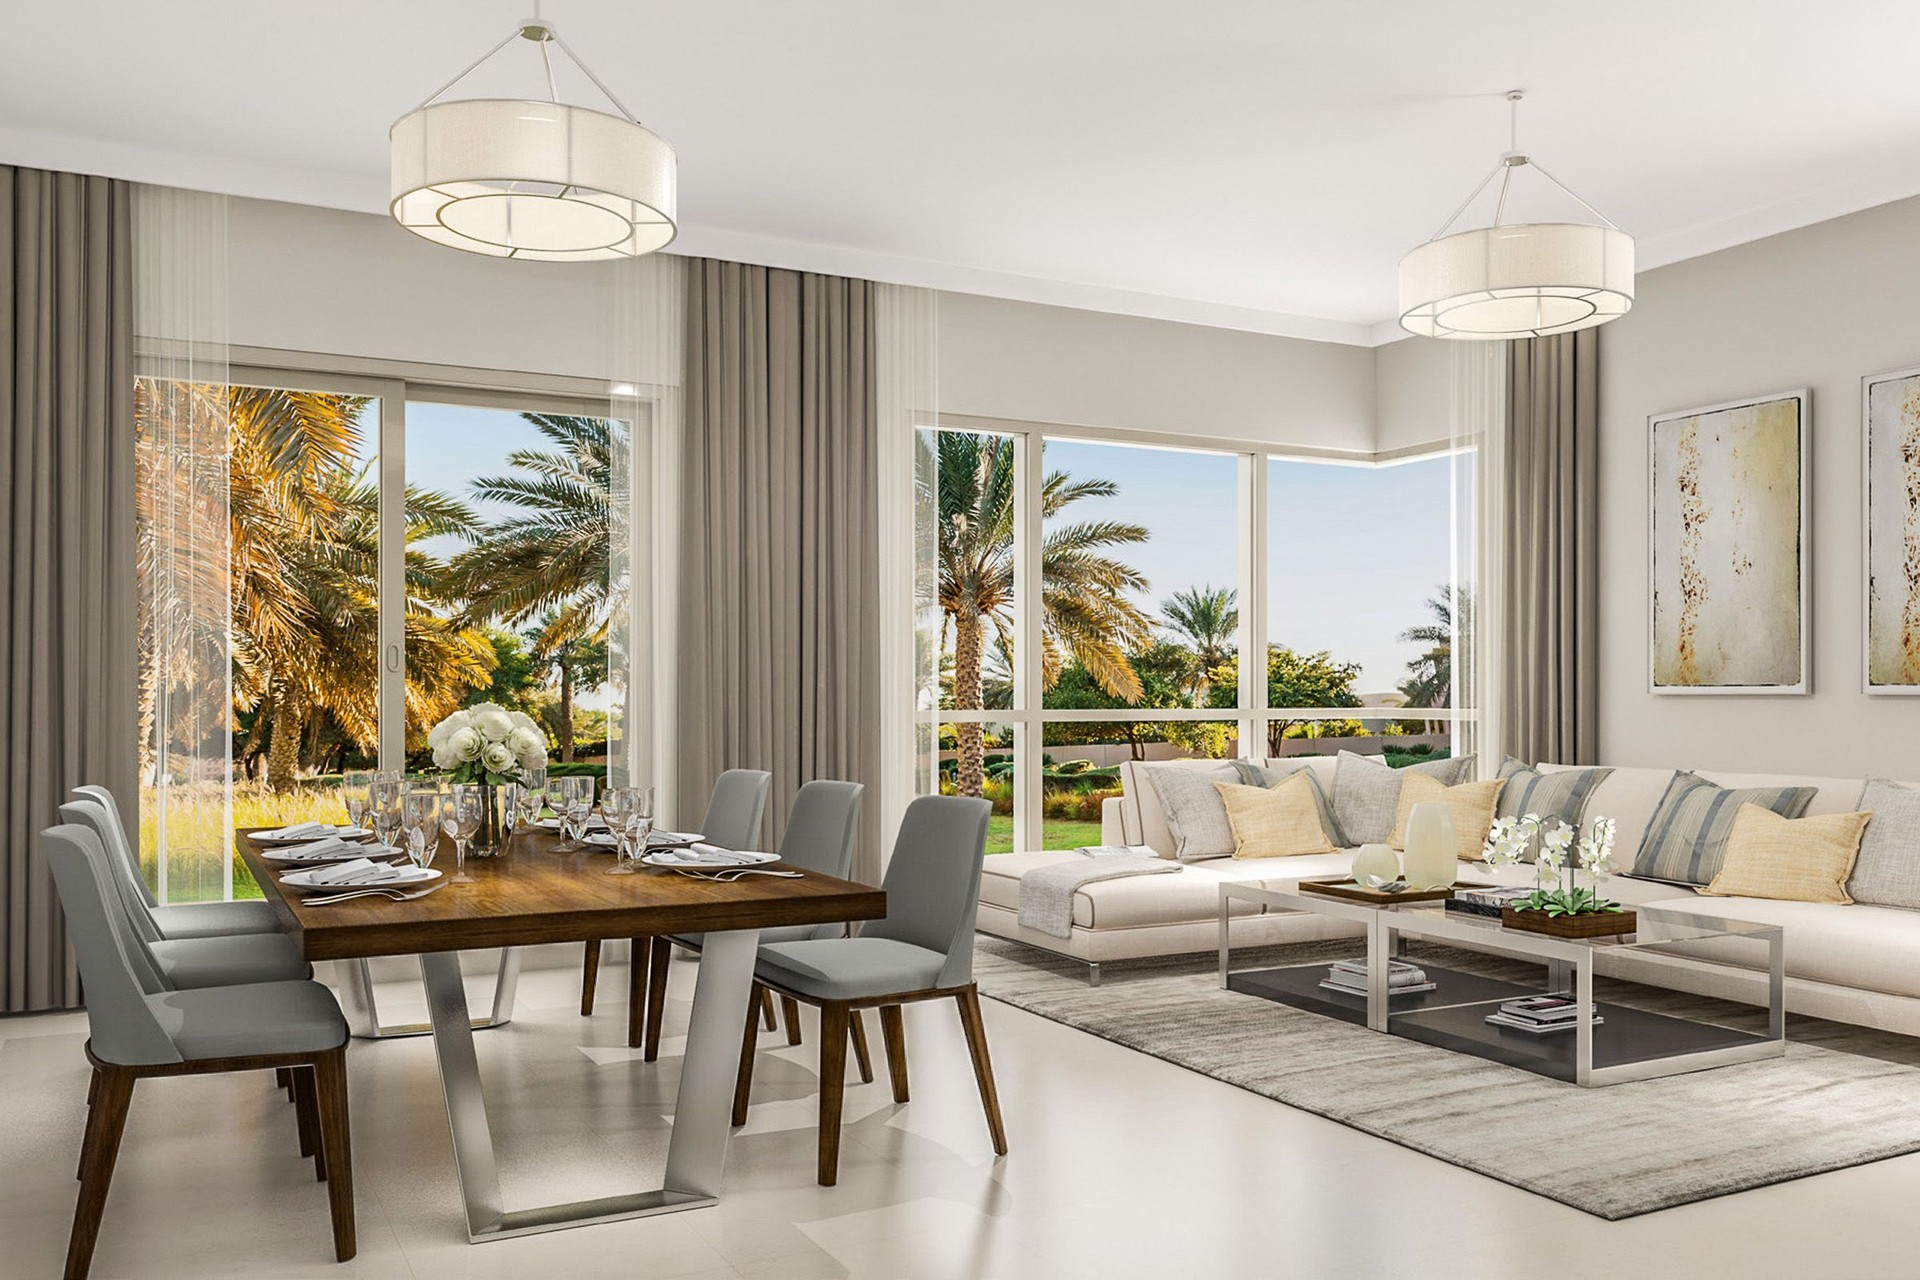 Luxury family home in vibrant Dubai Hills Estate community: Image 1